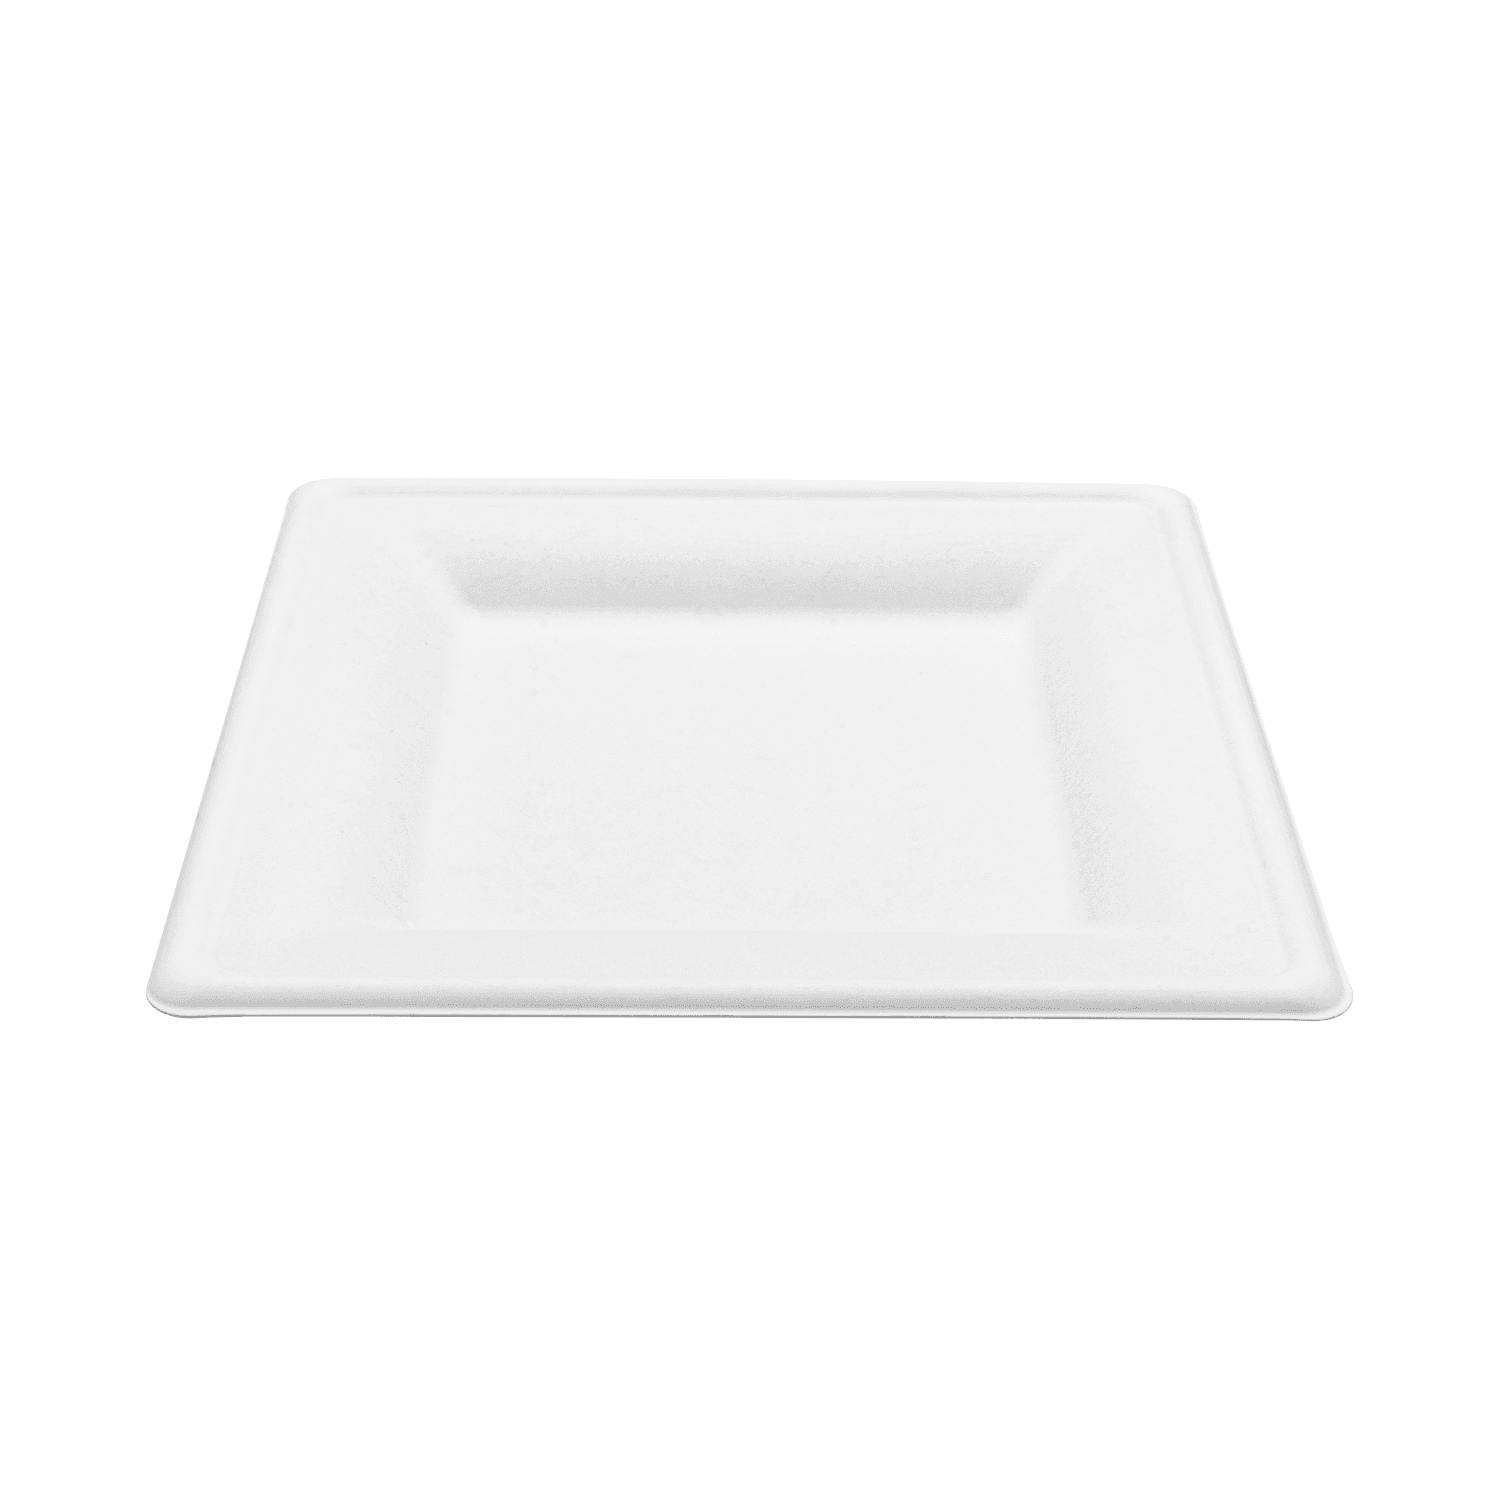 Karat Earth 10”x 10” PFAS Free Bagasse Eco-Friendly Square Plate , White - 500 pcs